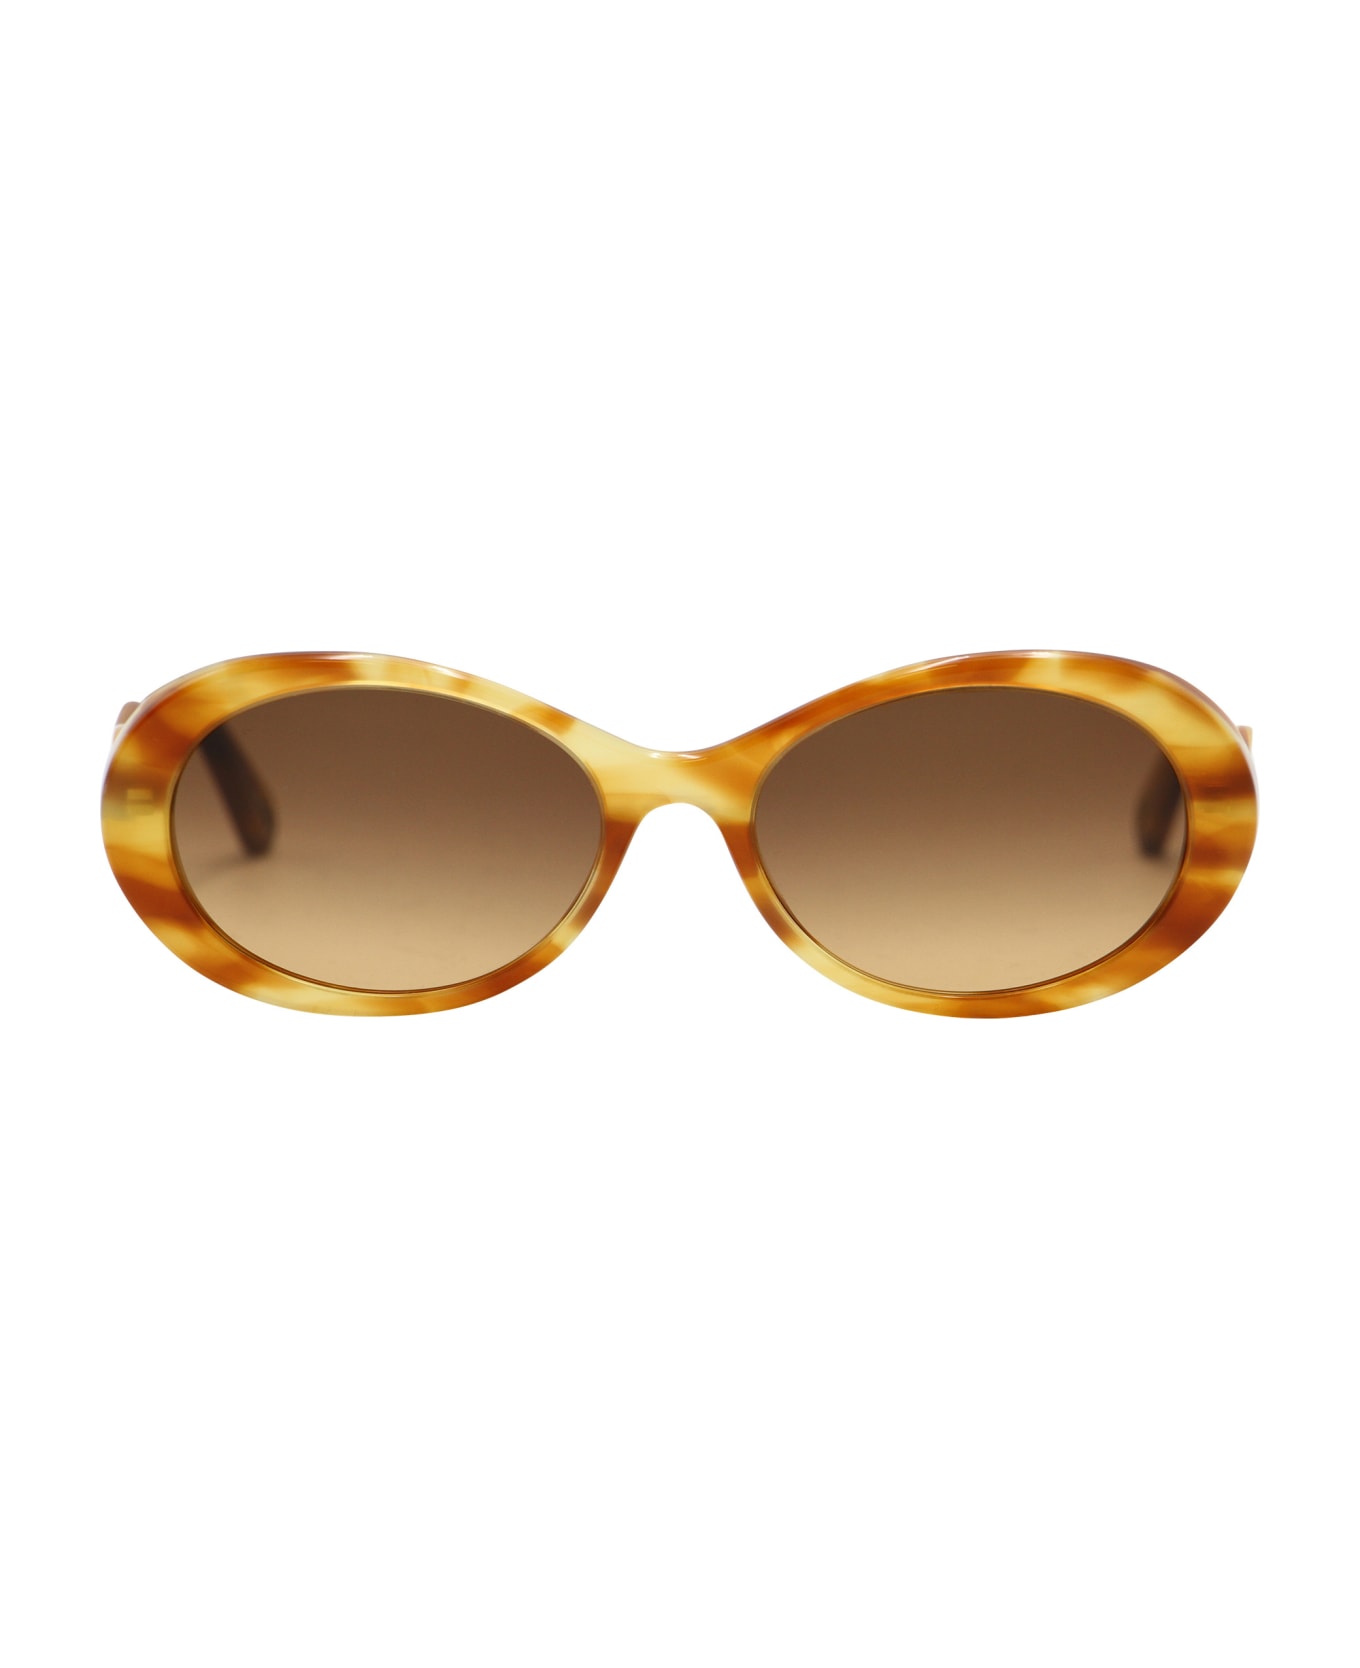 Chloé Tortoiseshell Sunglasses - brown